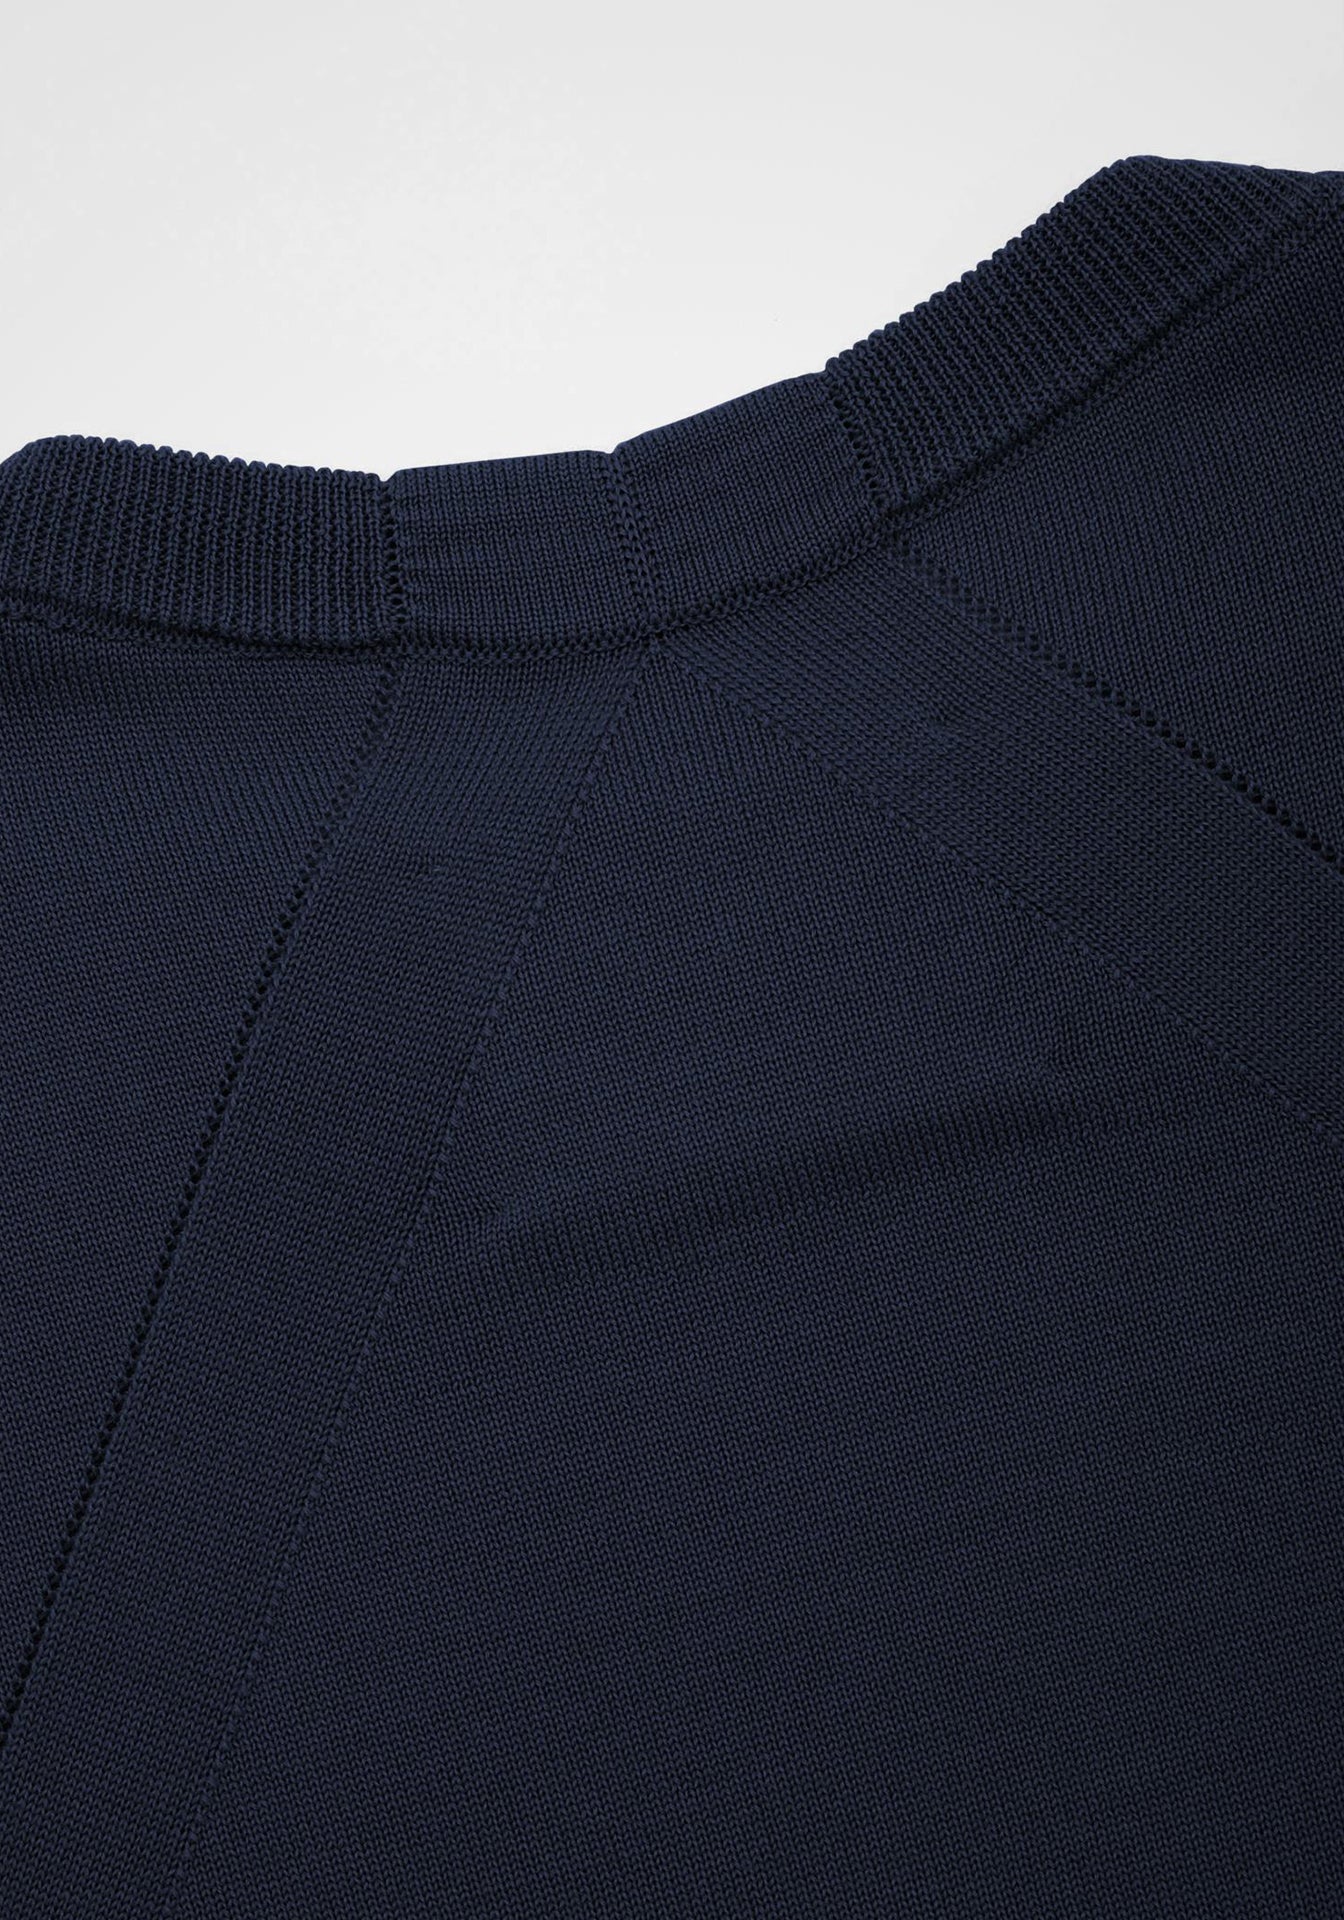 Long-Sleeve Merino Knit